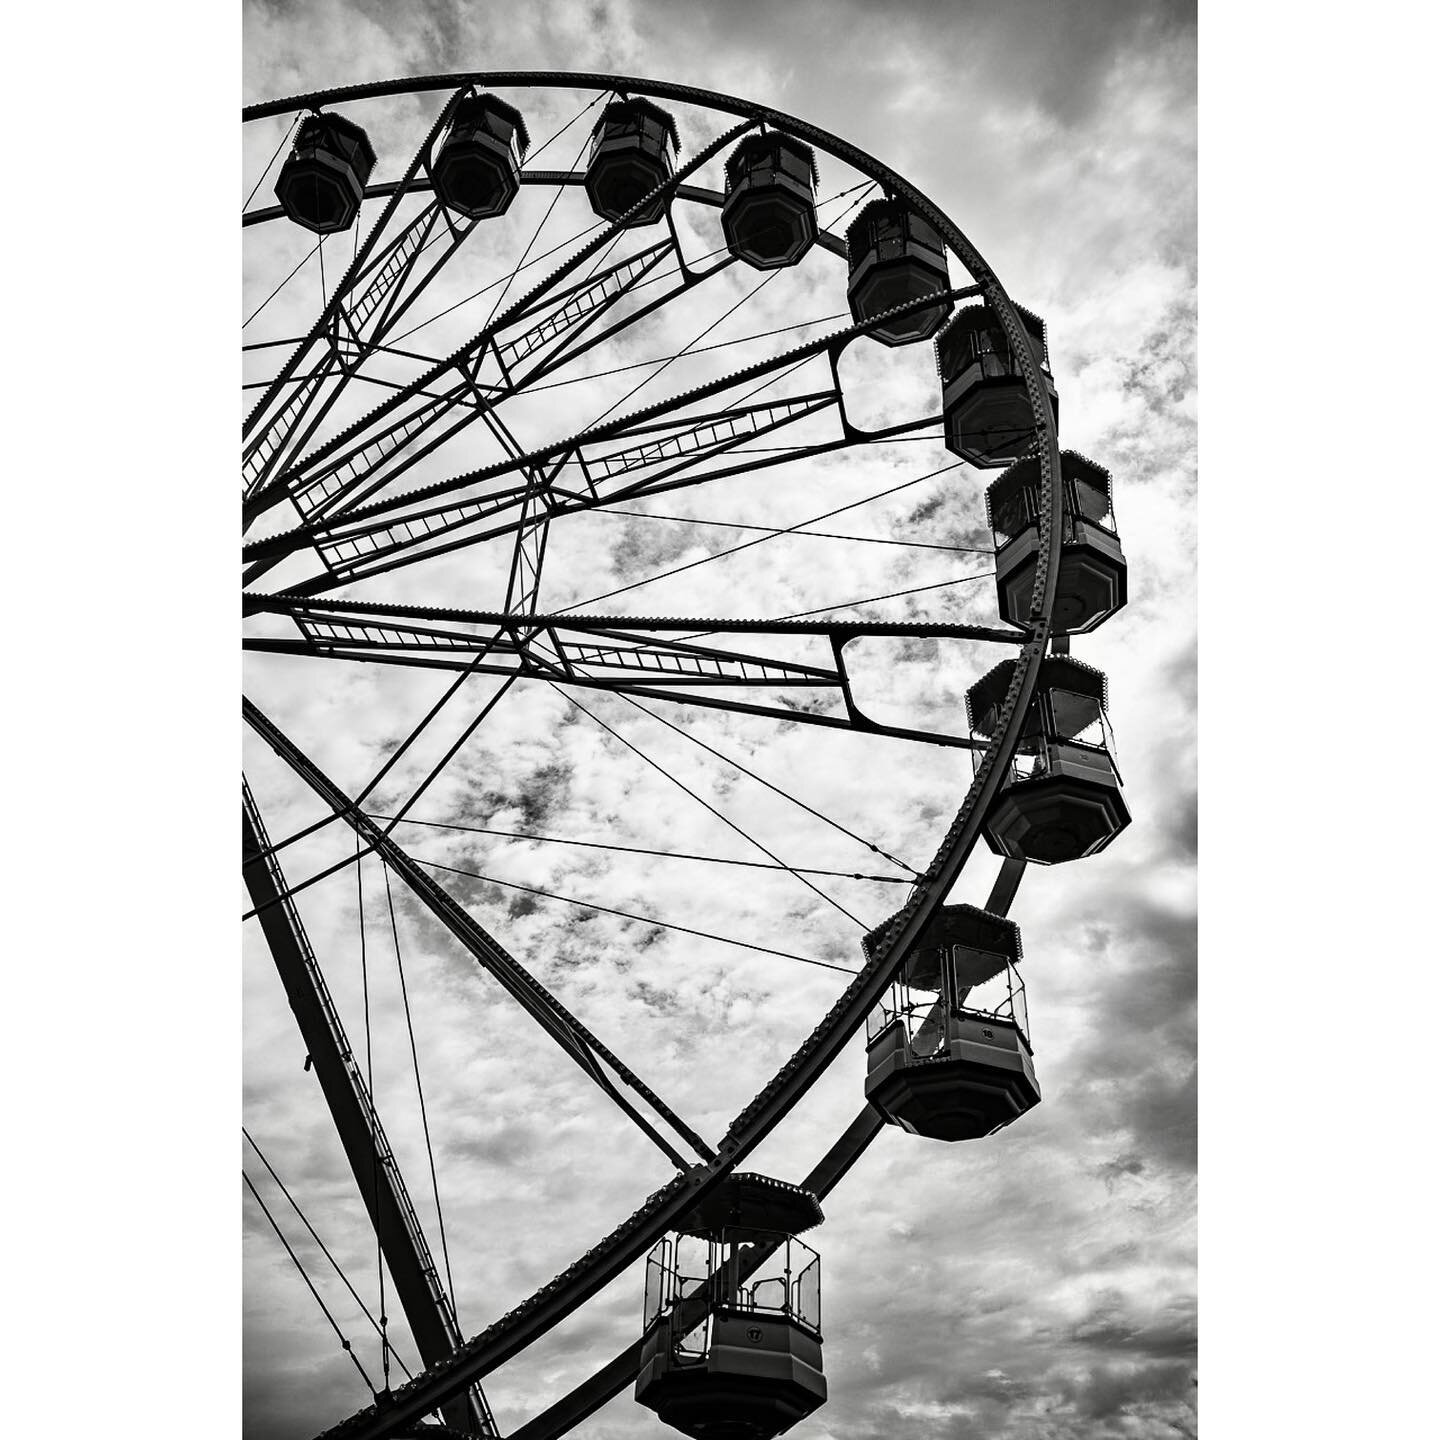 Cardiff Bay Giant Ferris Wheel